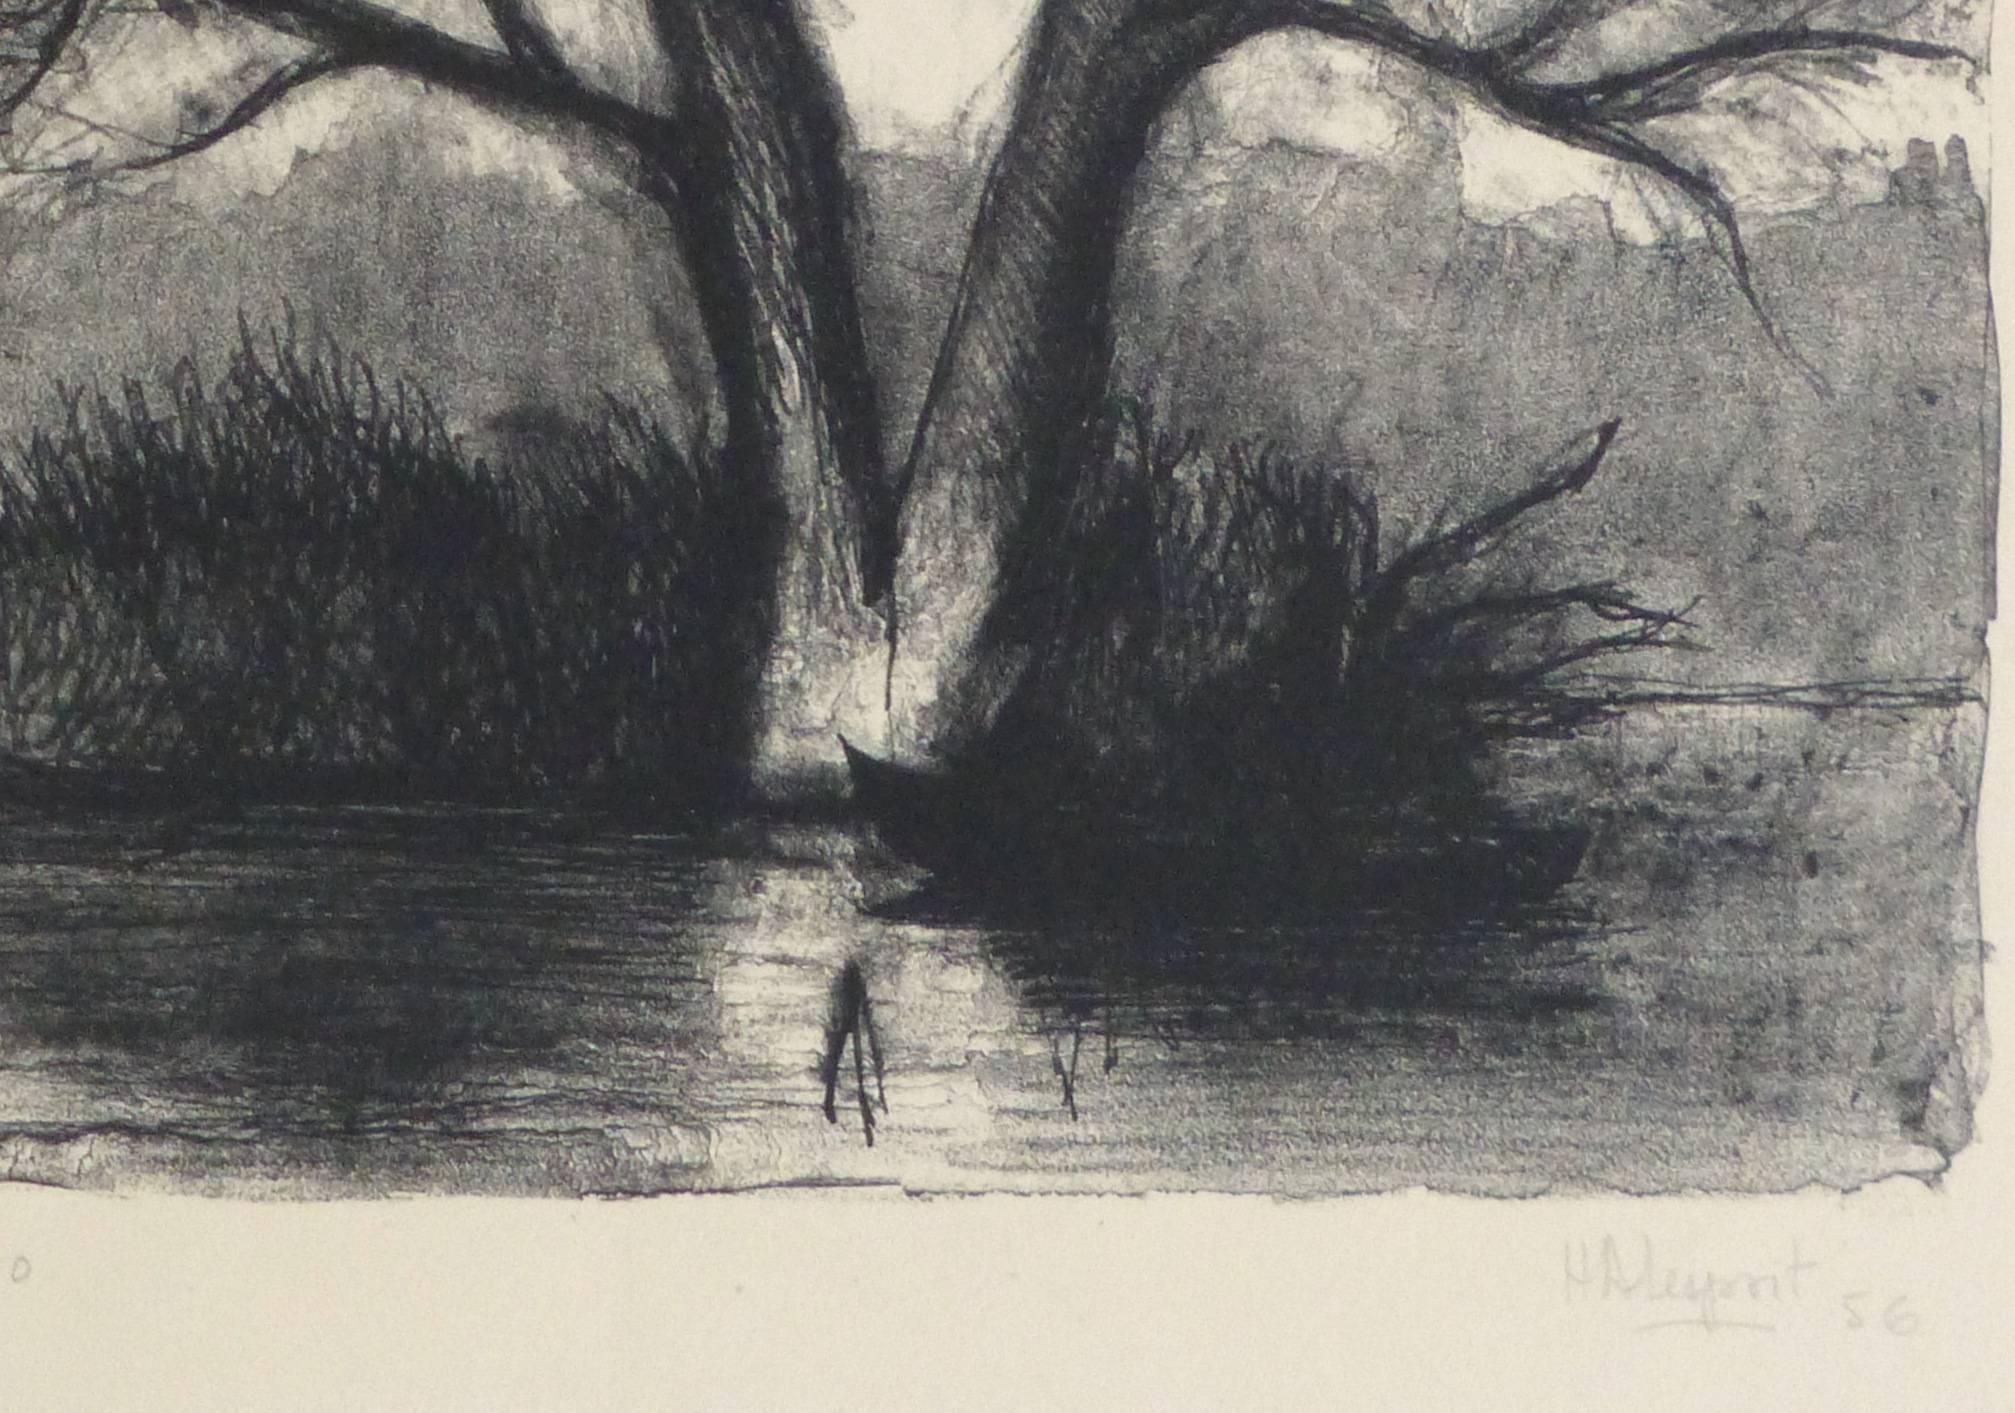 Landscape Tree by a Lake - Stately Splendor - Print by Henri Alain Lesprit